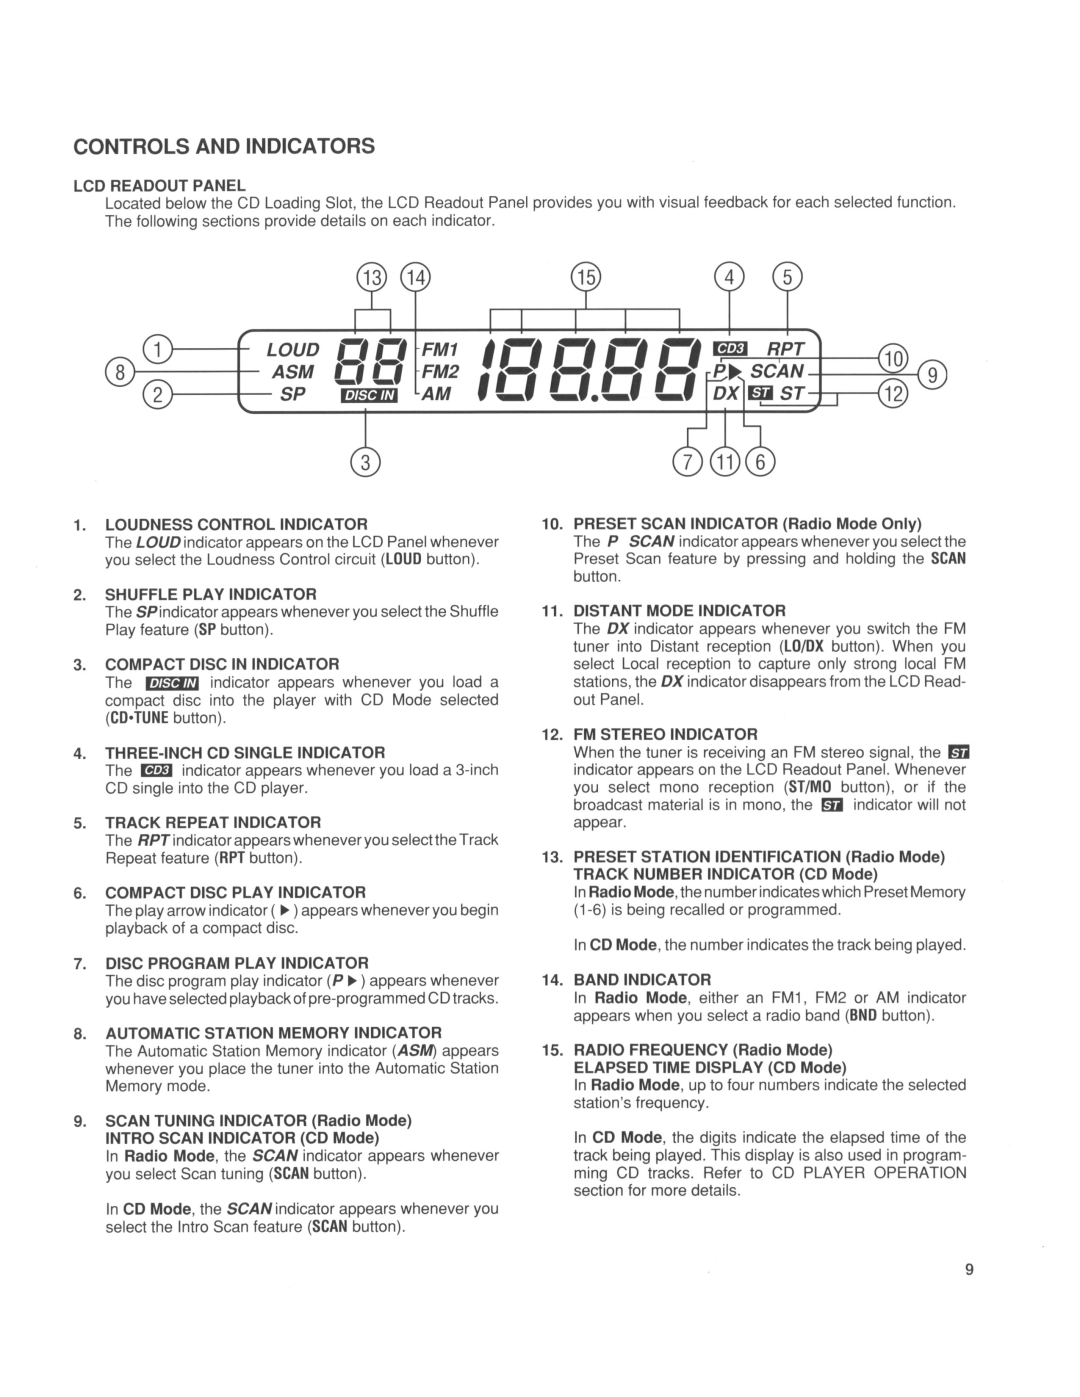 Concept Enterprises CD-303 manual 